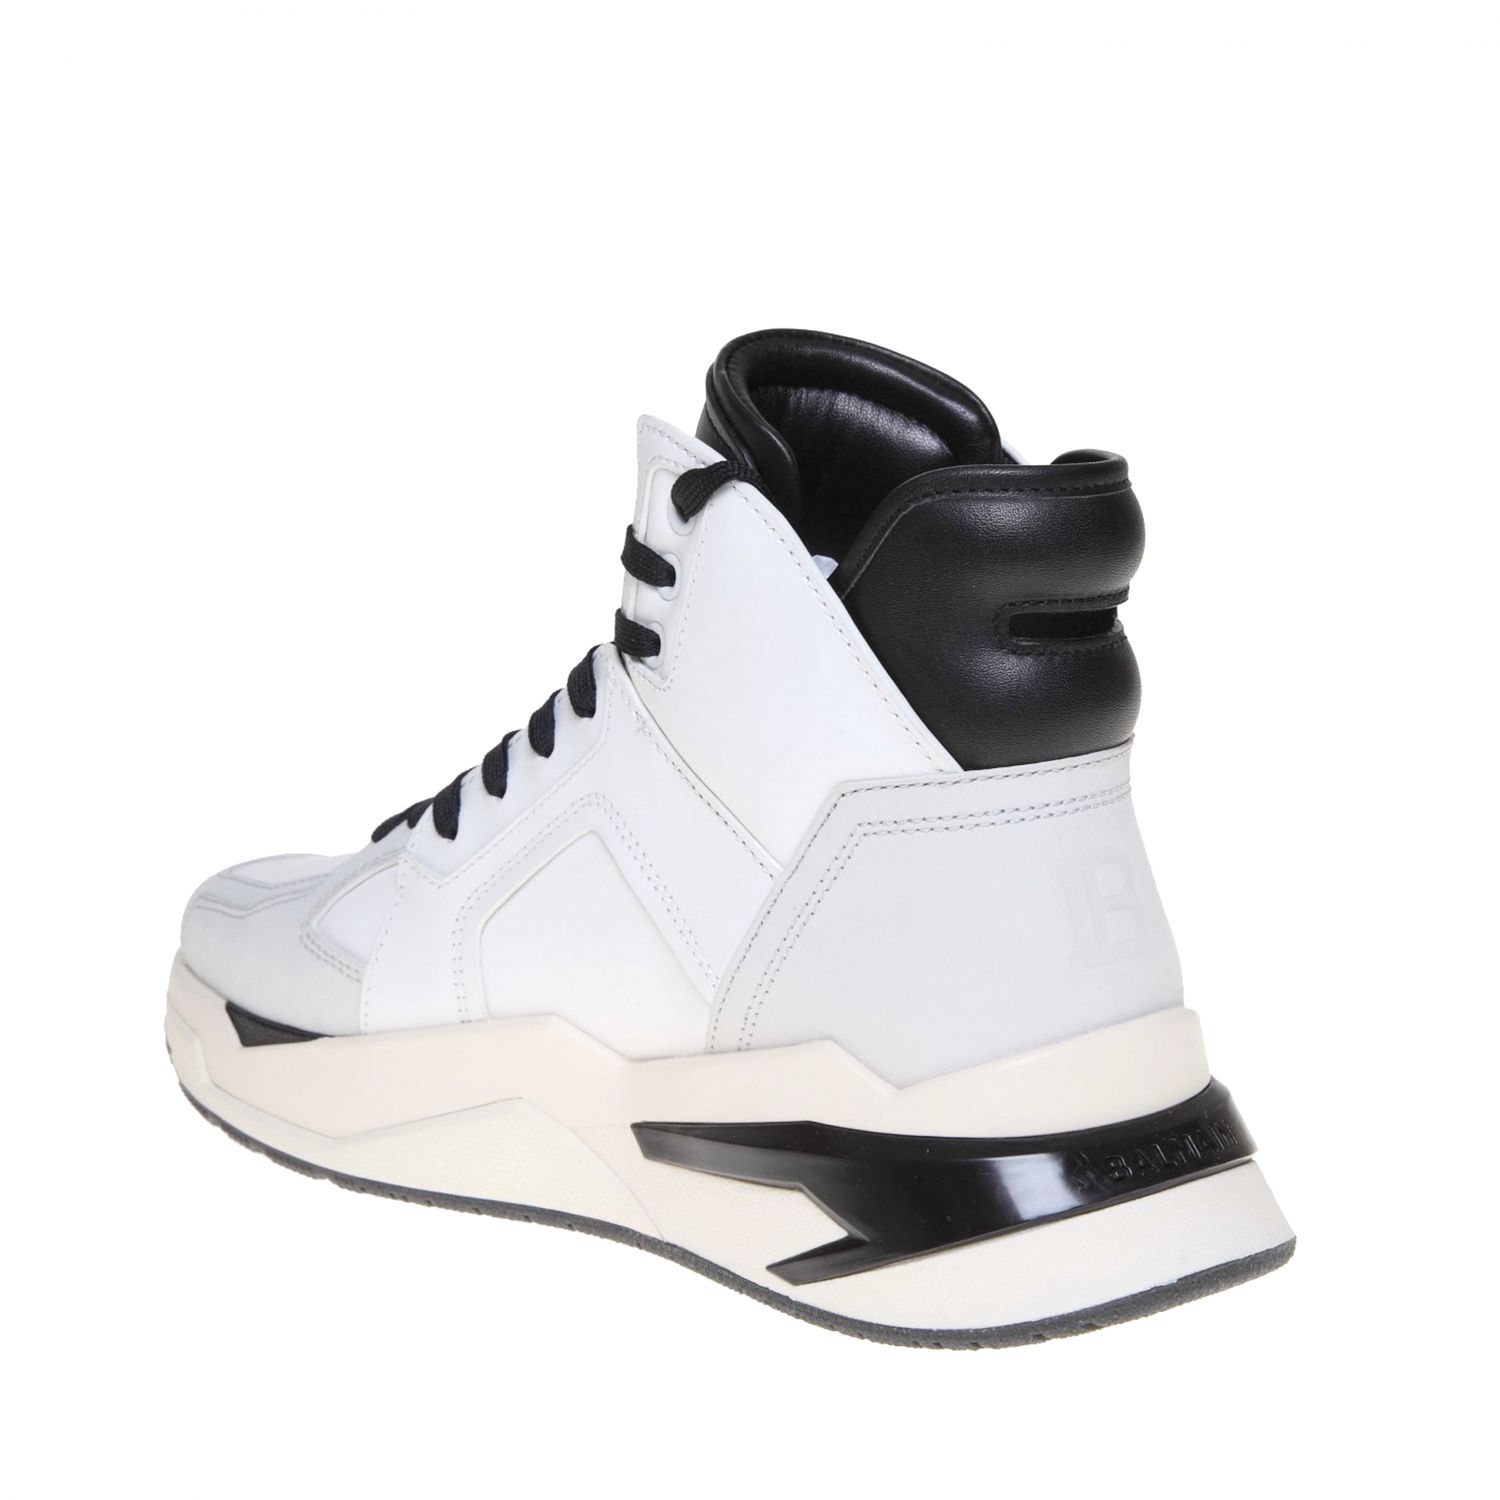 Balmain Outlet: Sneakers men | Sneakers Balmain Men White | Sneakers ...